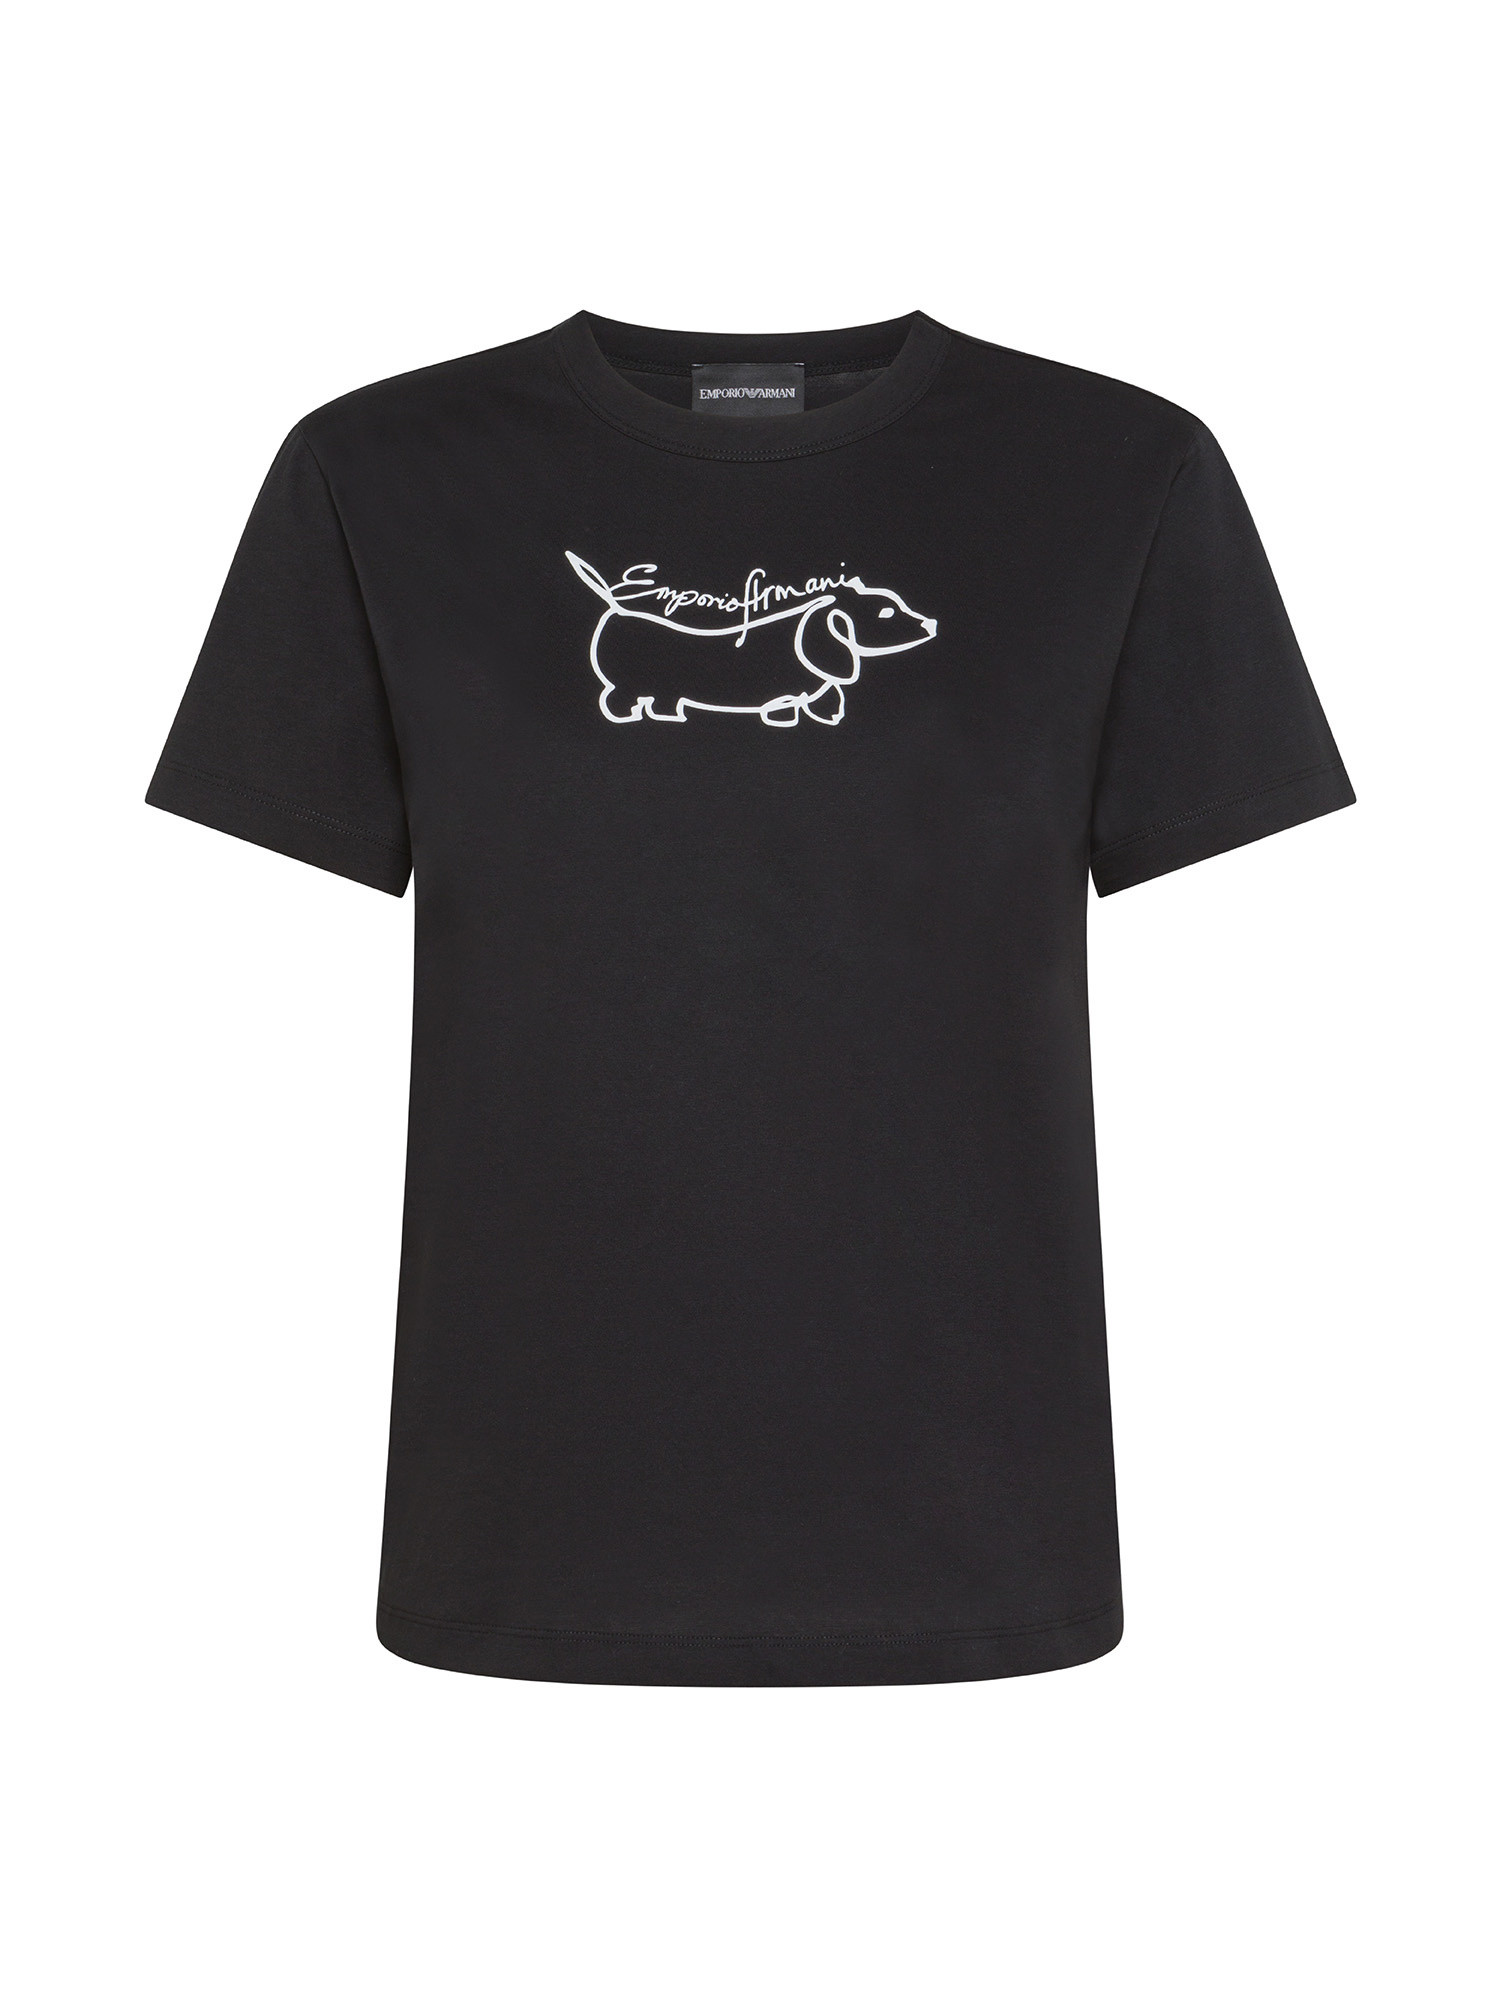 Emporio Armani - T-shirt in cotone con logo, Nero, large image number 0